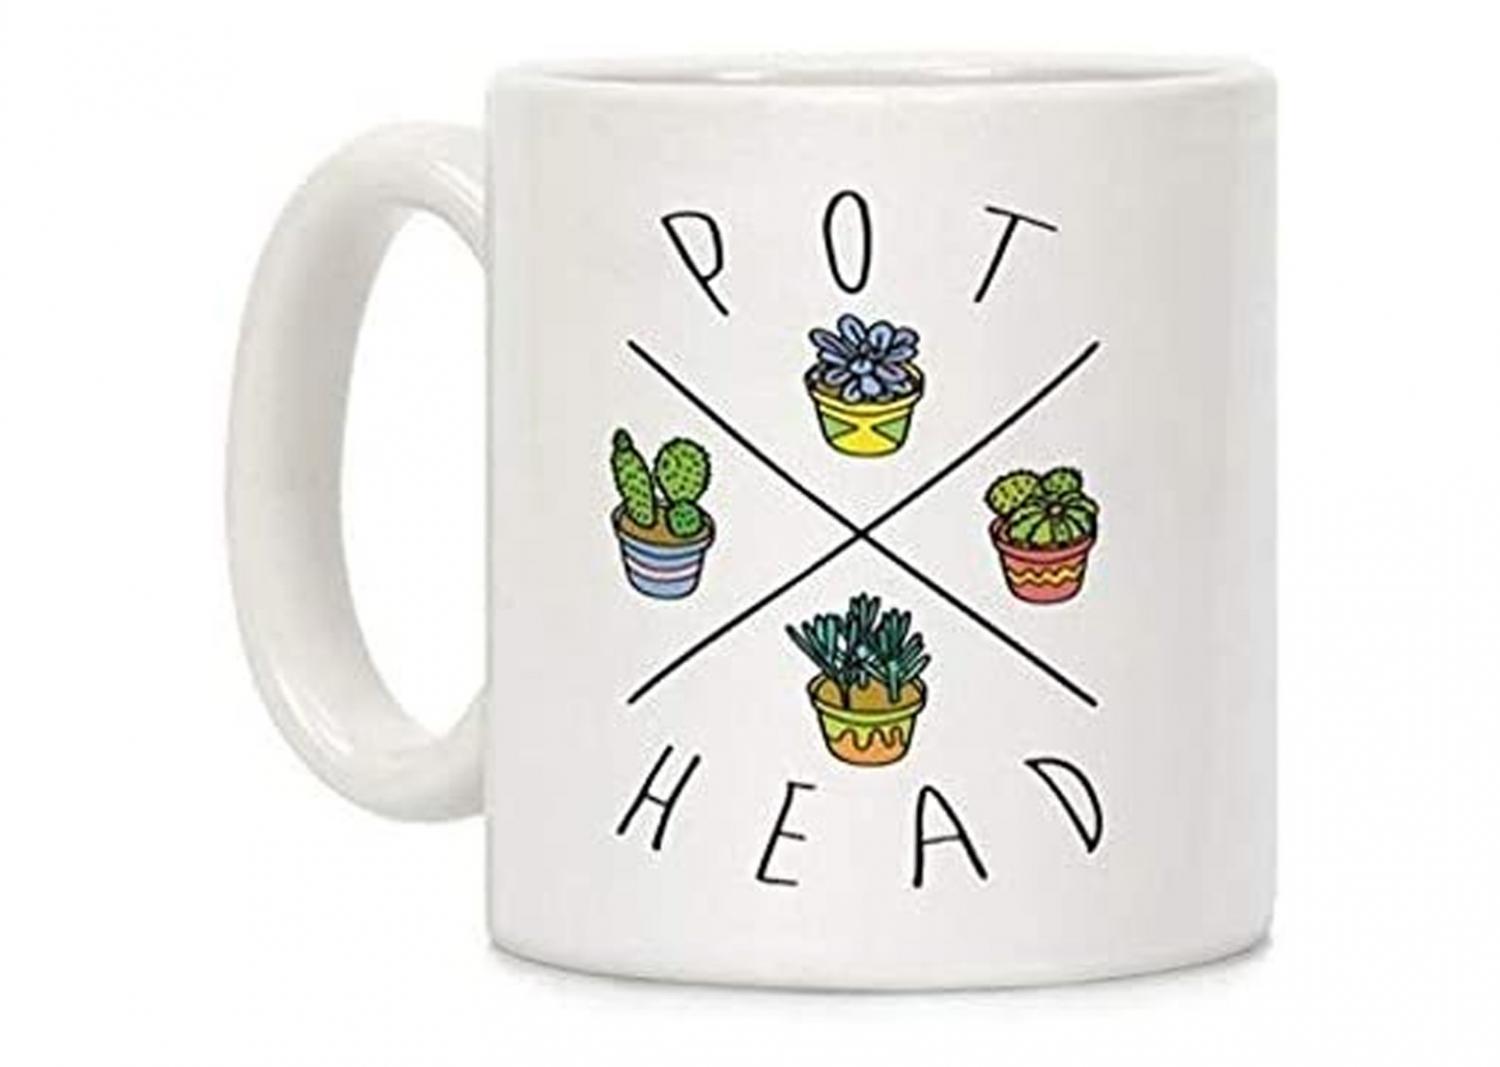 Pot Head Gardening Coffee Mug